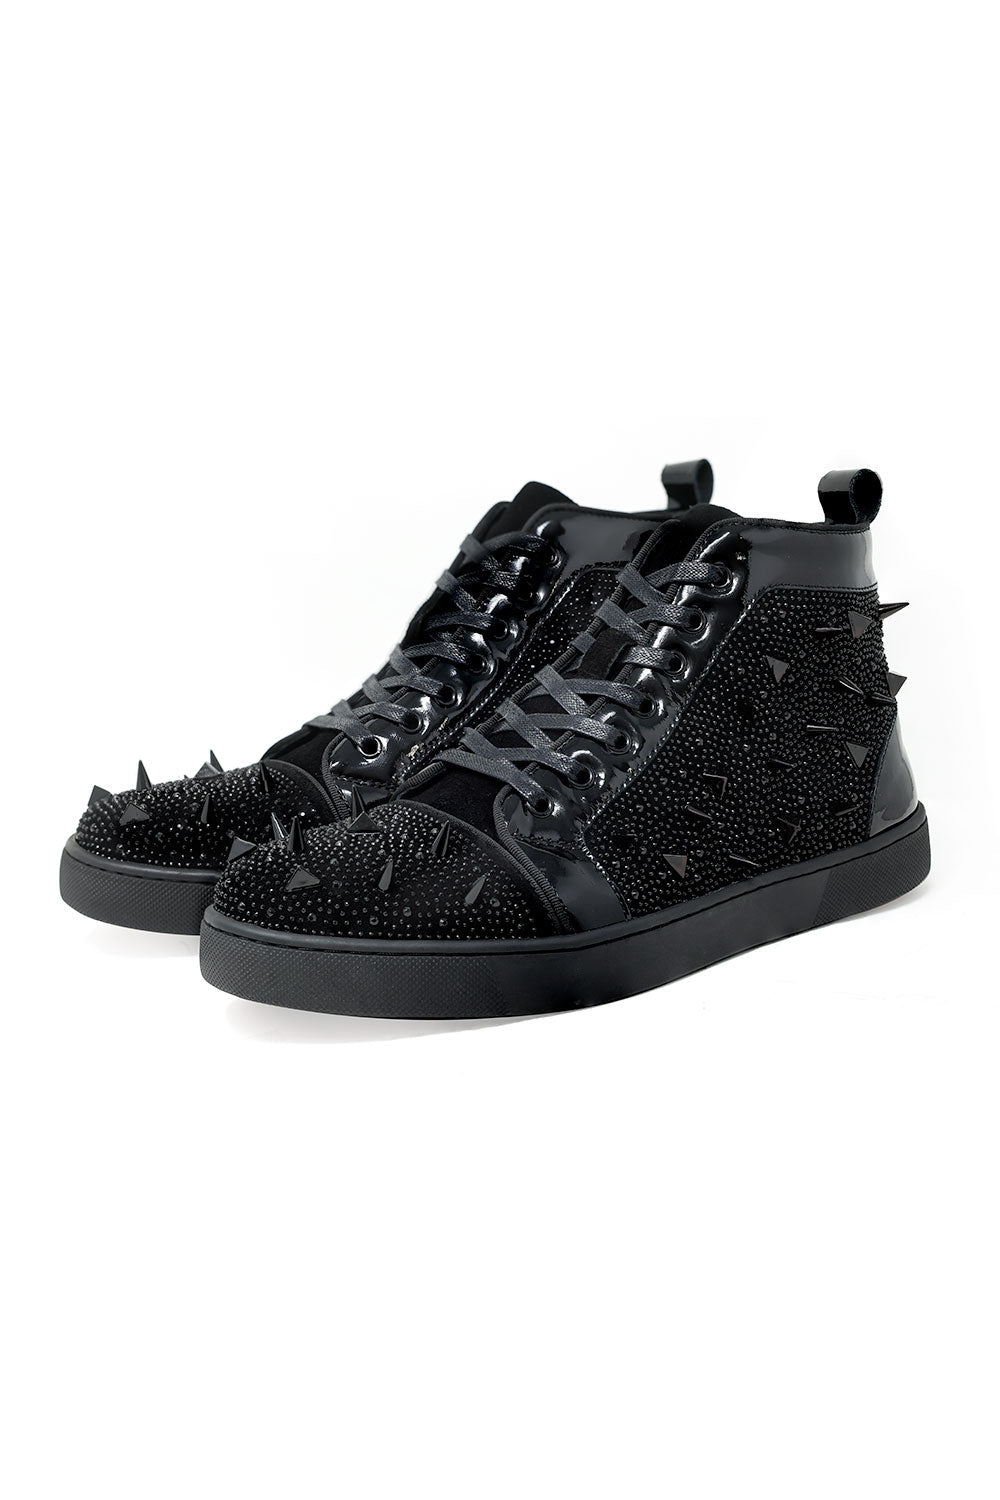 Barabas men's rhinestone spike black high-top sneakers SH715 Black